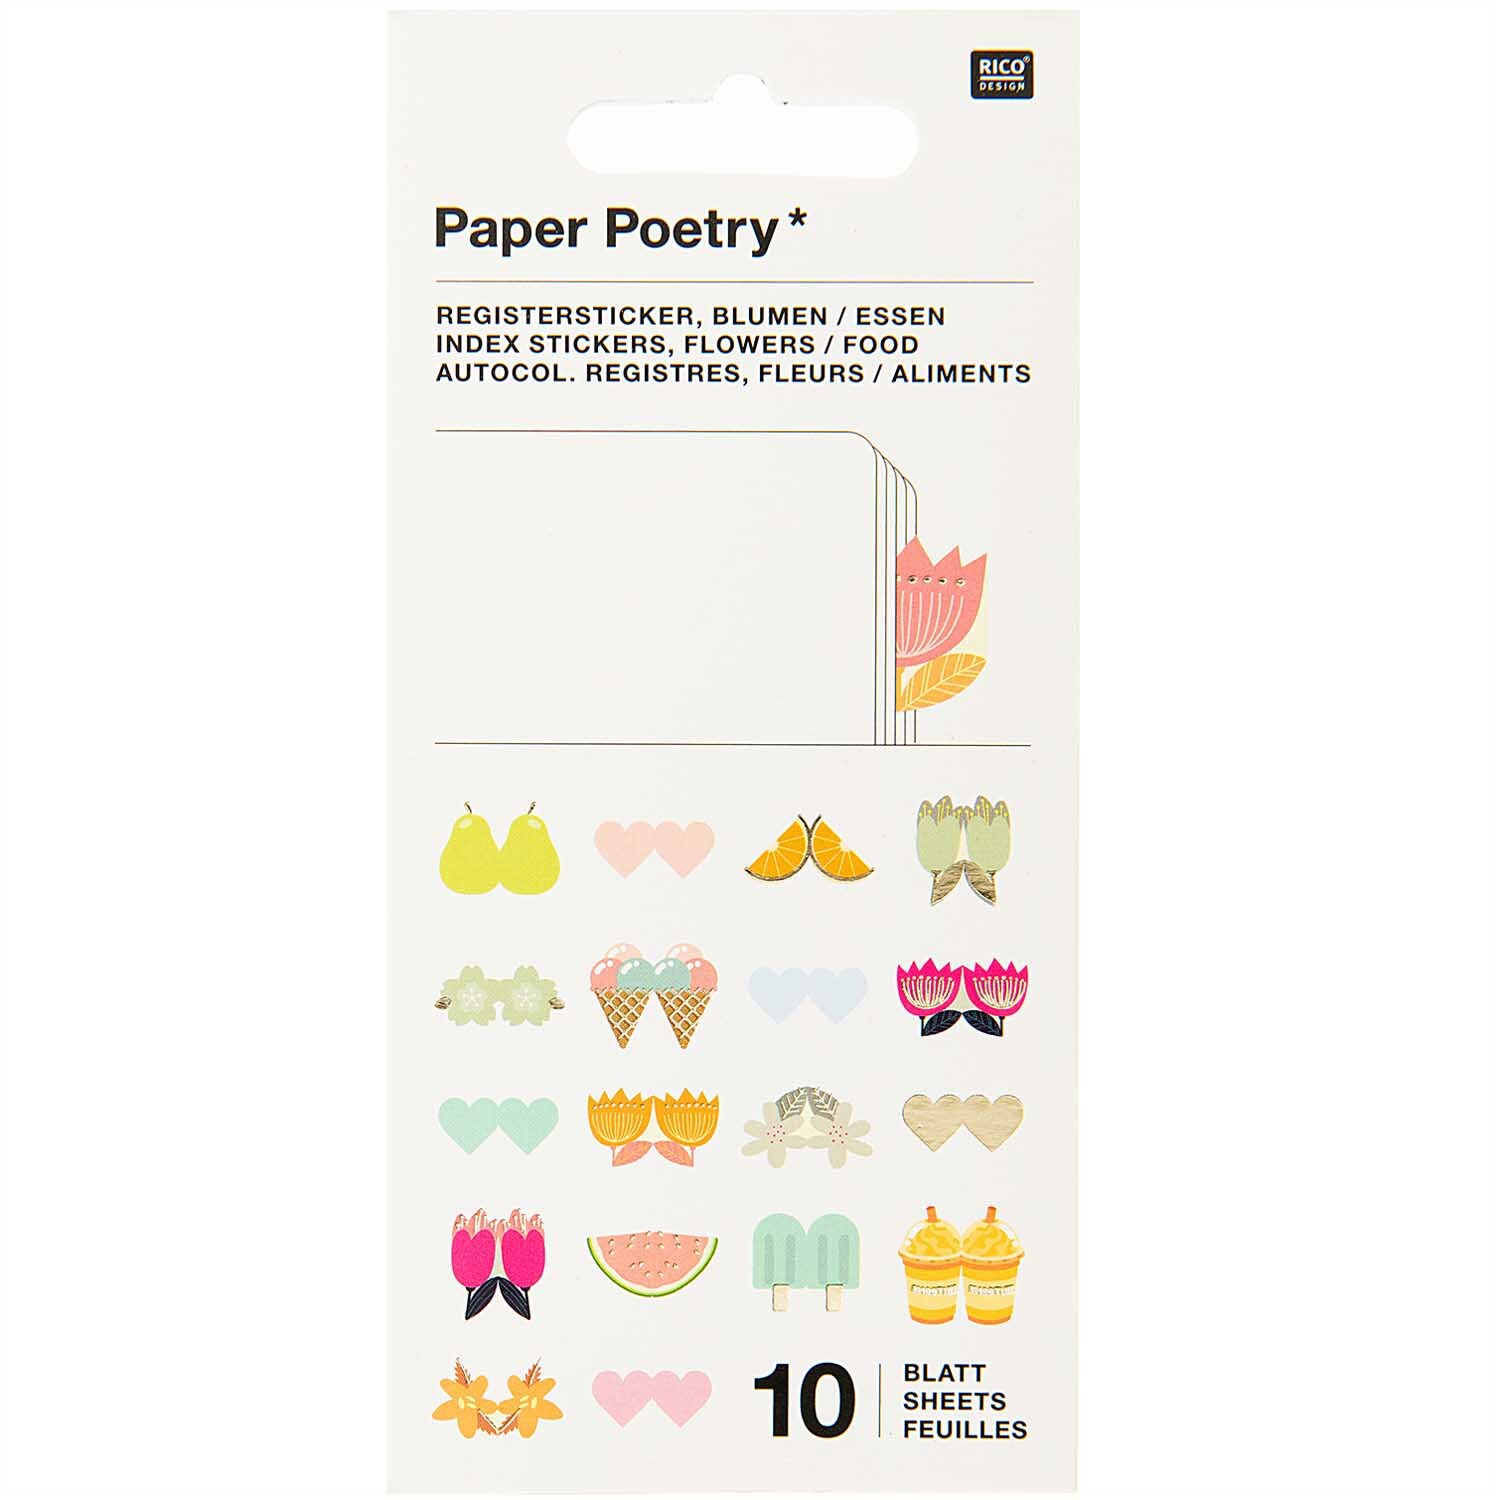 Paper Poetry Stickerbuch Register Blumen 10 Blatt